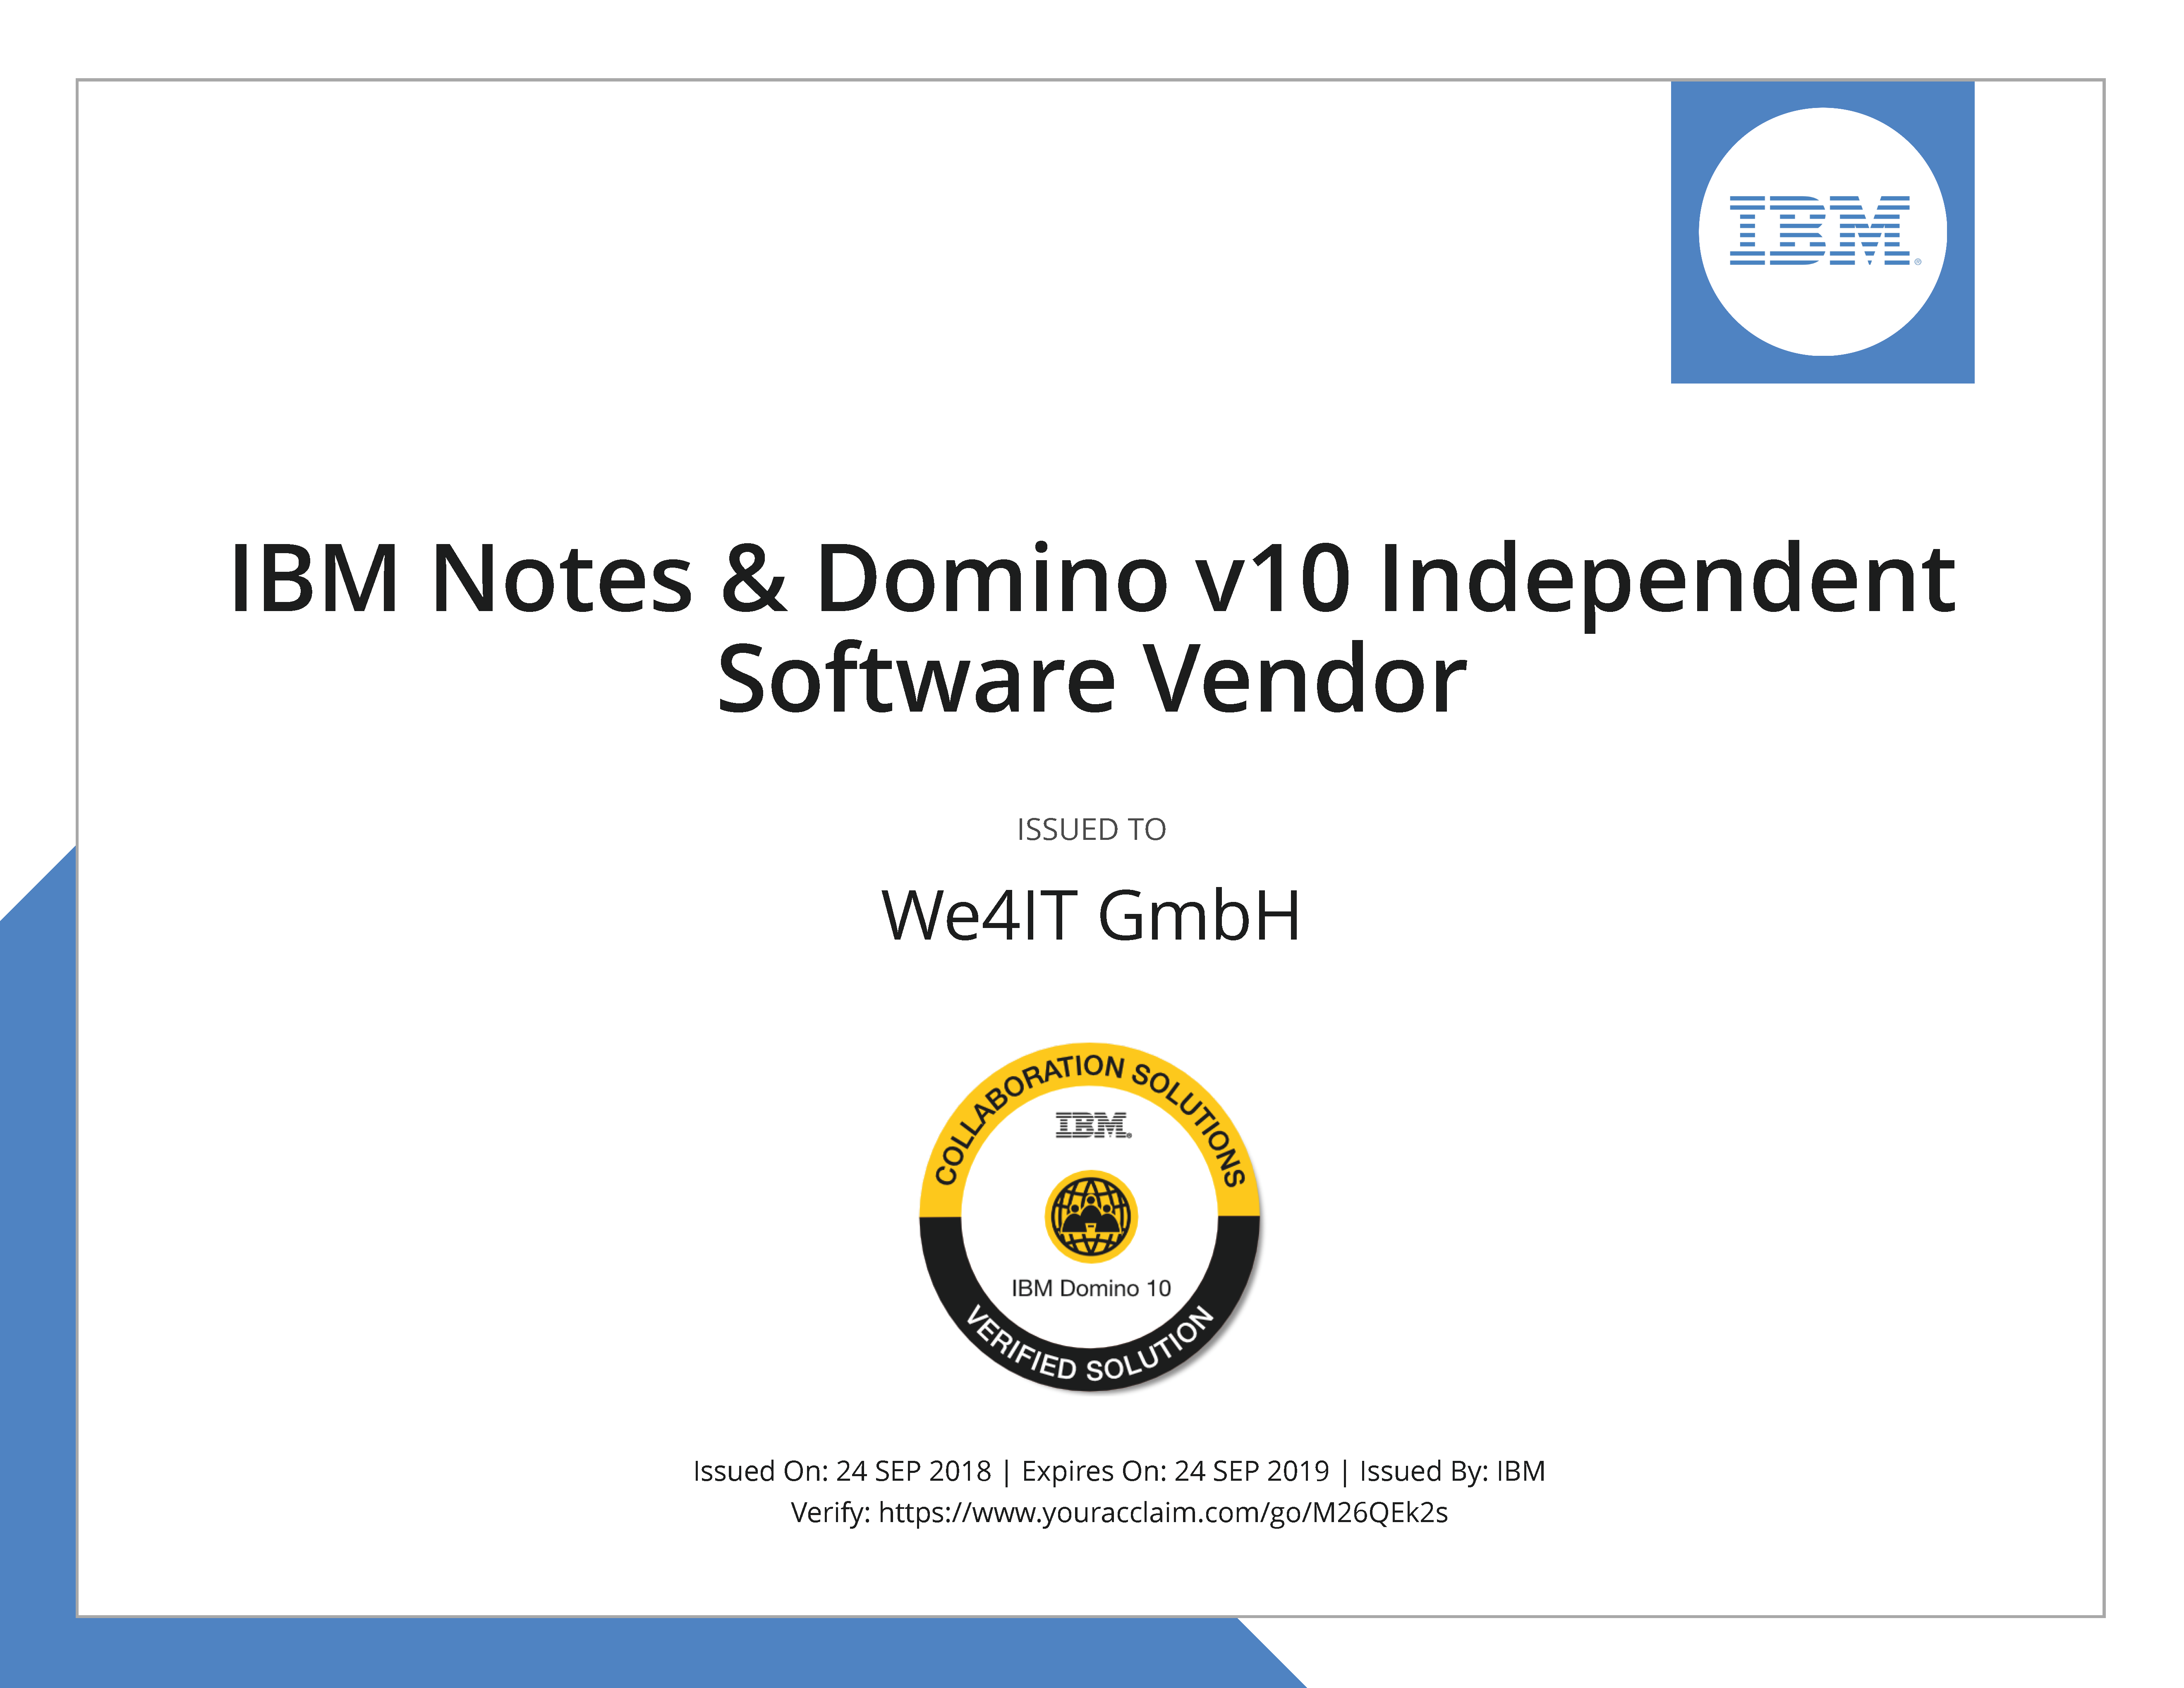 IBM_Notes___Domino_v10_Independent_Software_Vendor_Badge20180927-10-1wg4aco